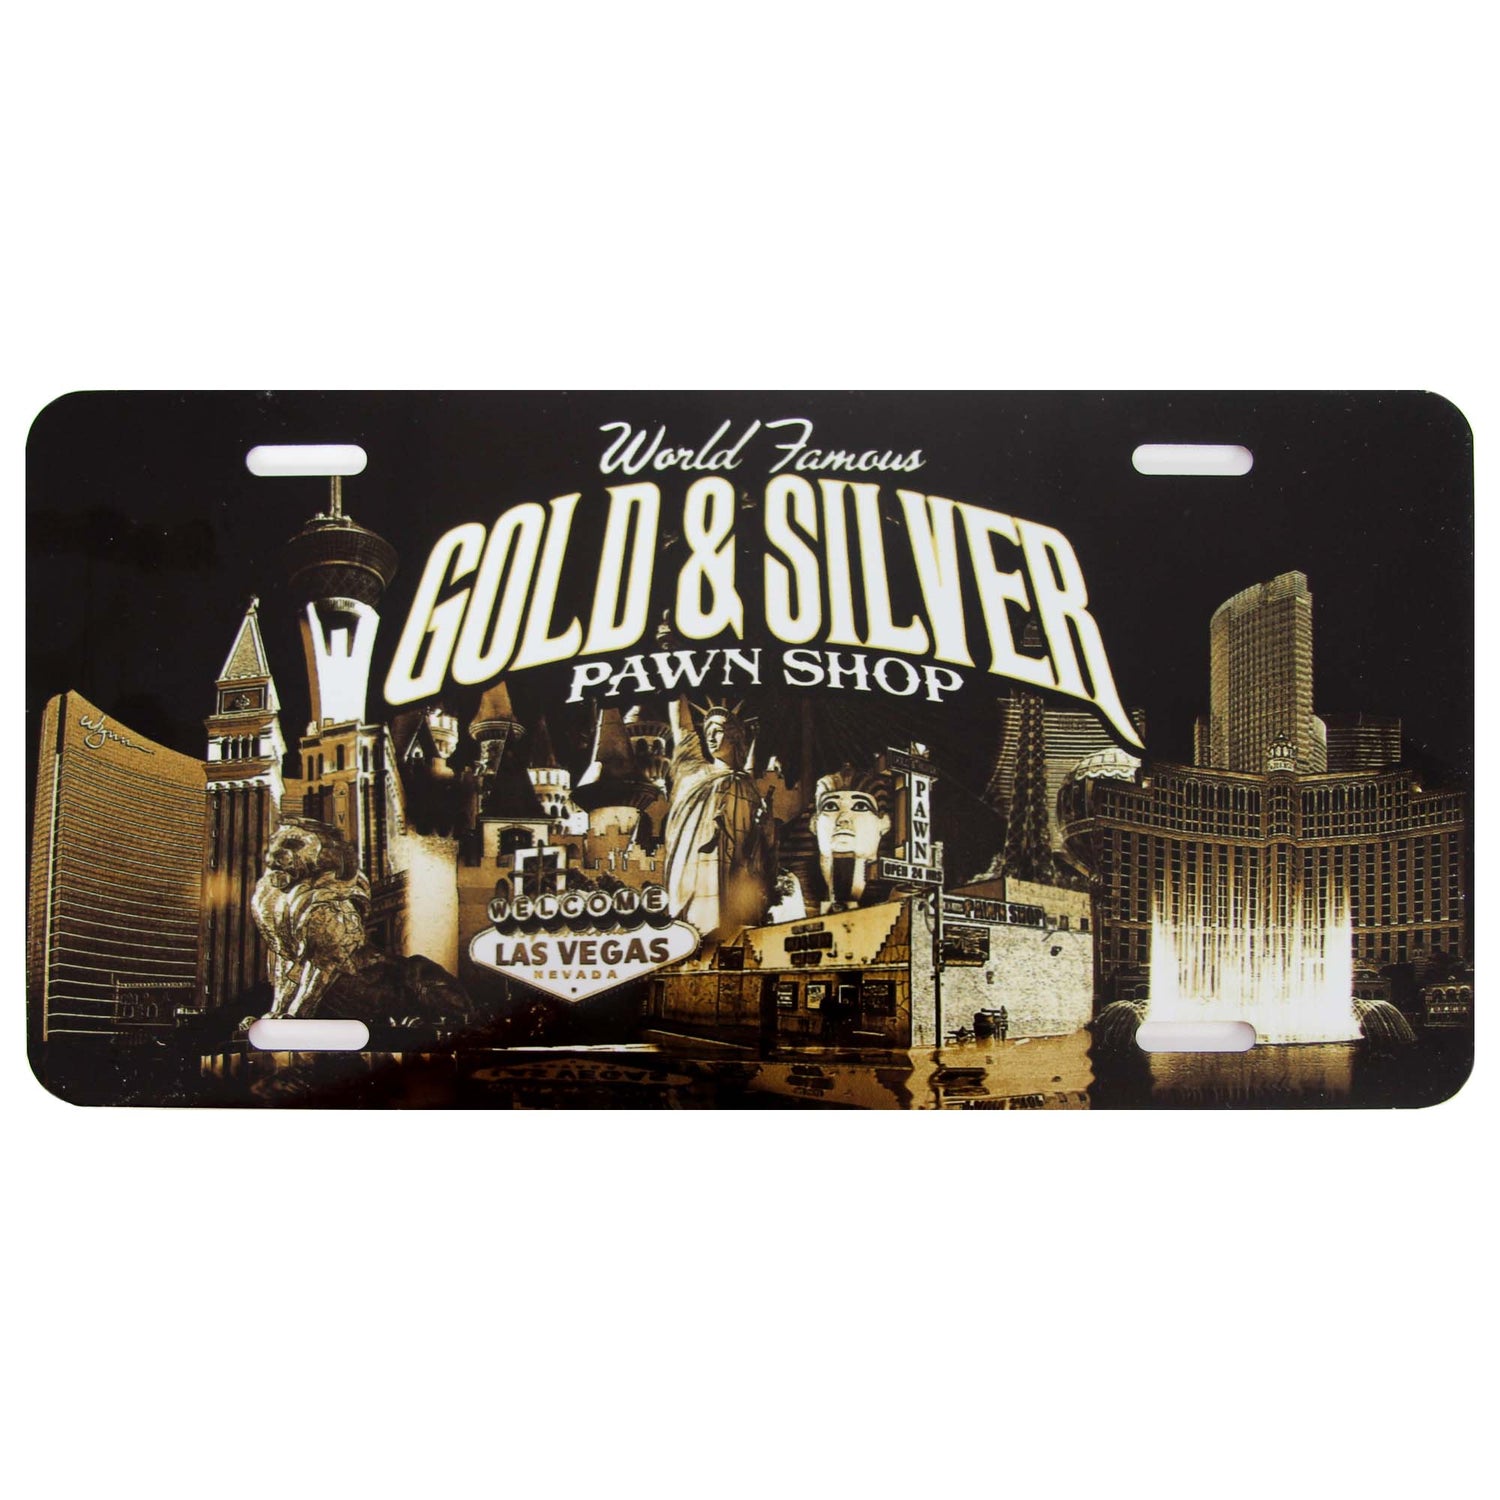 Las Vegas Gold & Silver Pawn Shop License Plate ZOOM